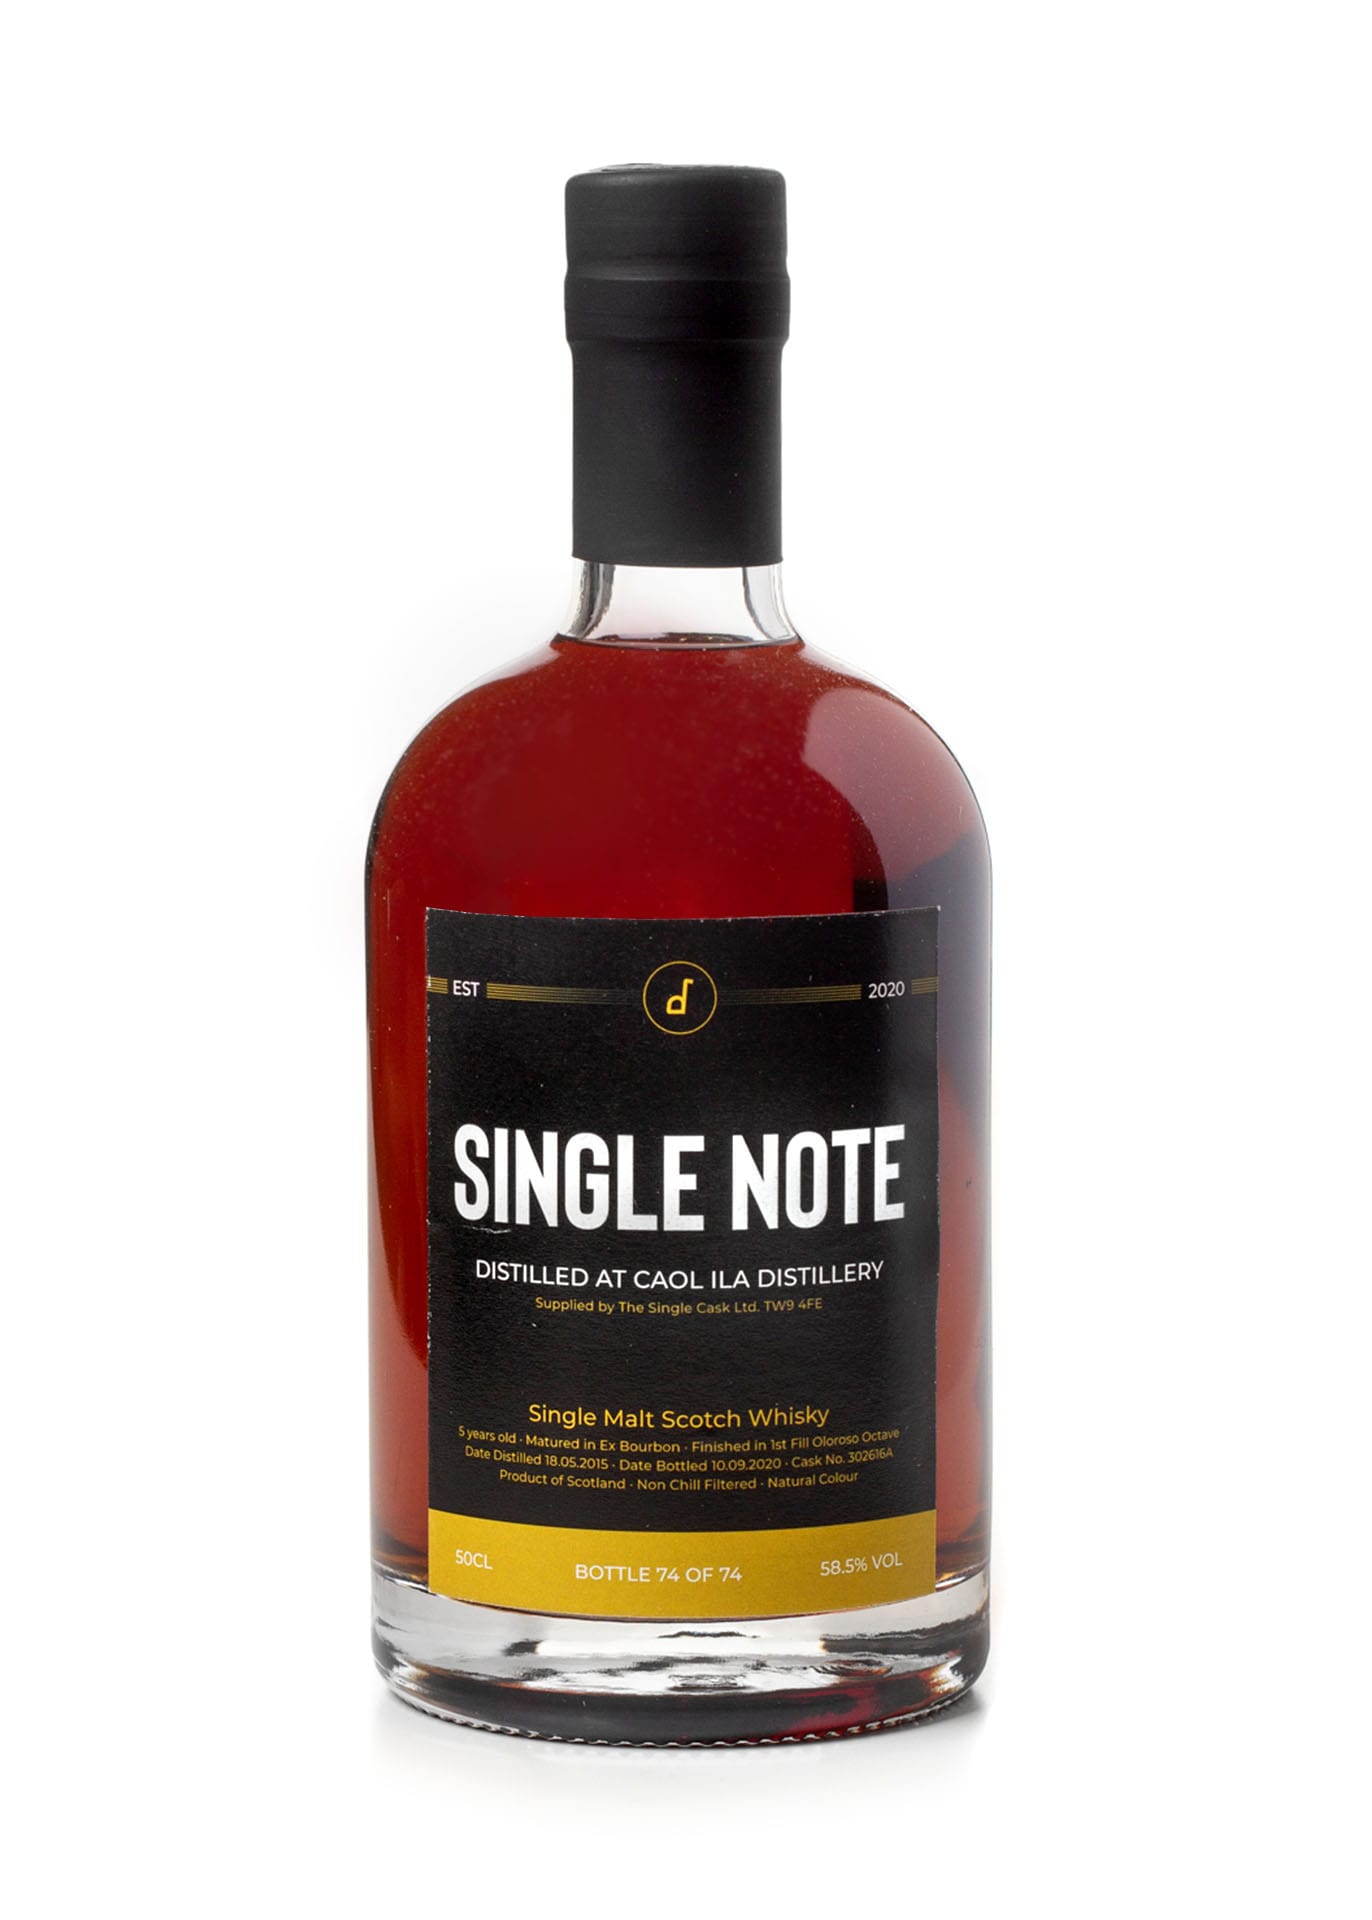 Caol Ila 5 Year Old Single Malt Scotch Whisky from Single Note